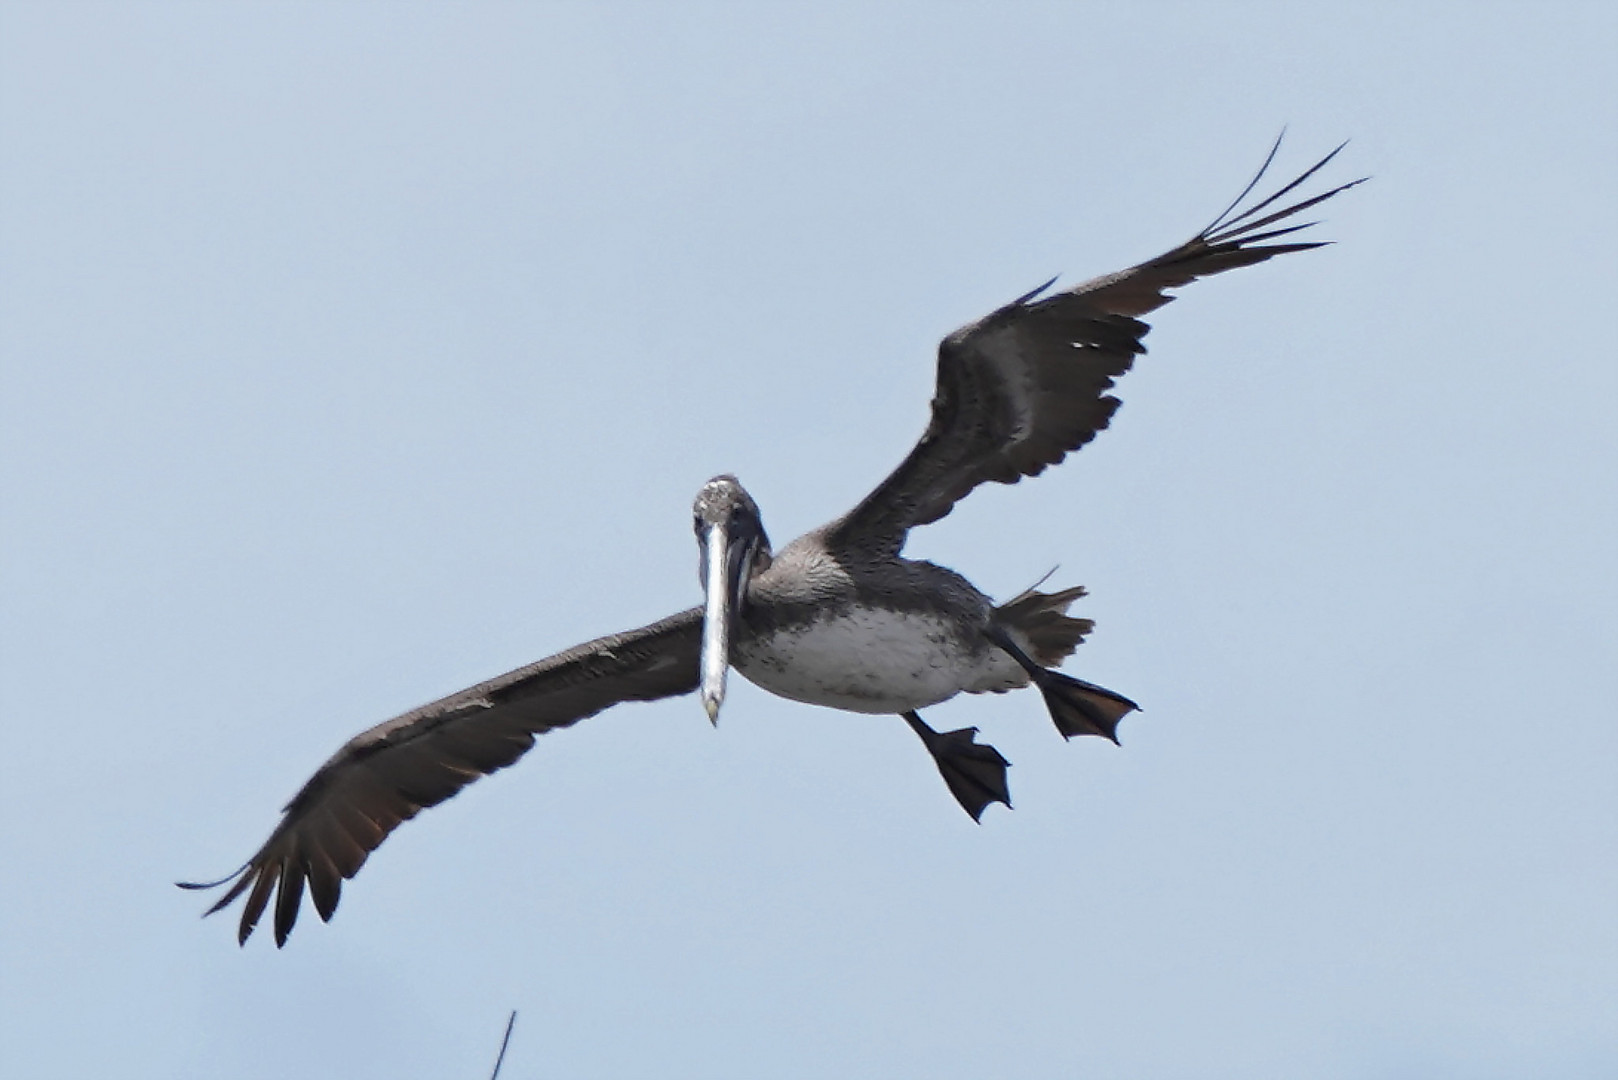 Brauner Pelikan kurz vor Sturzflug